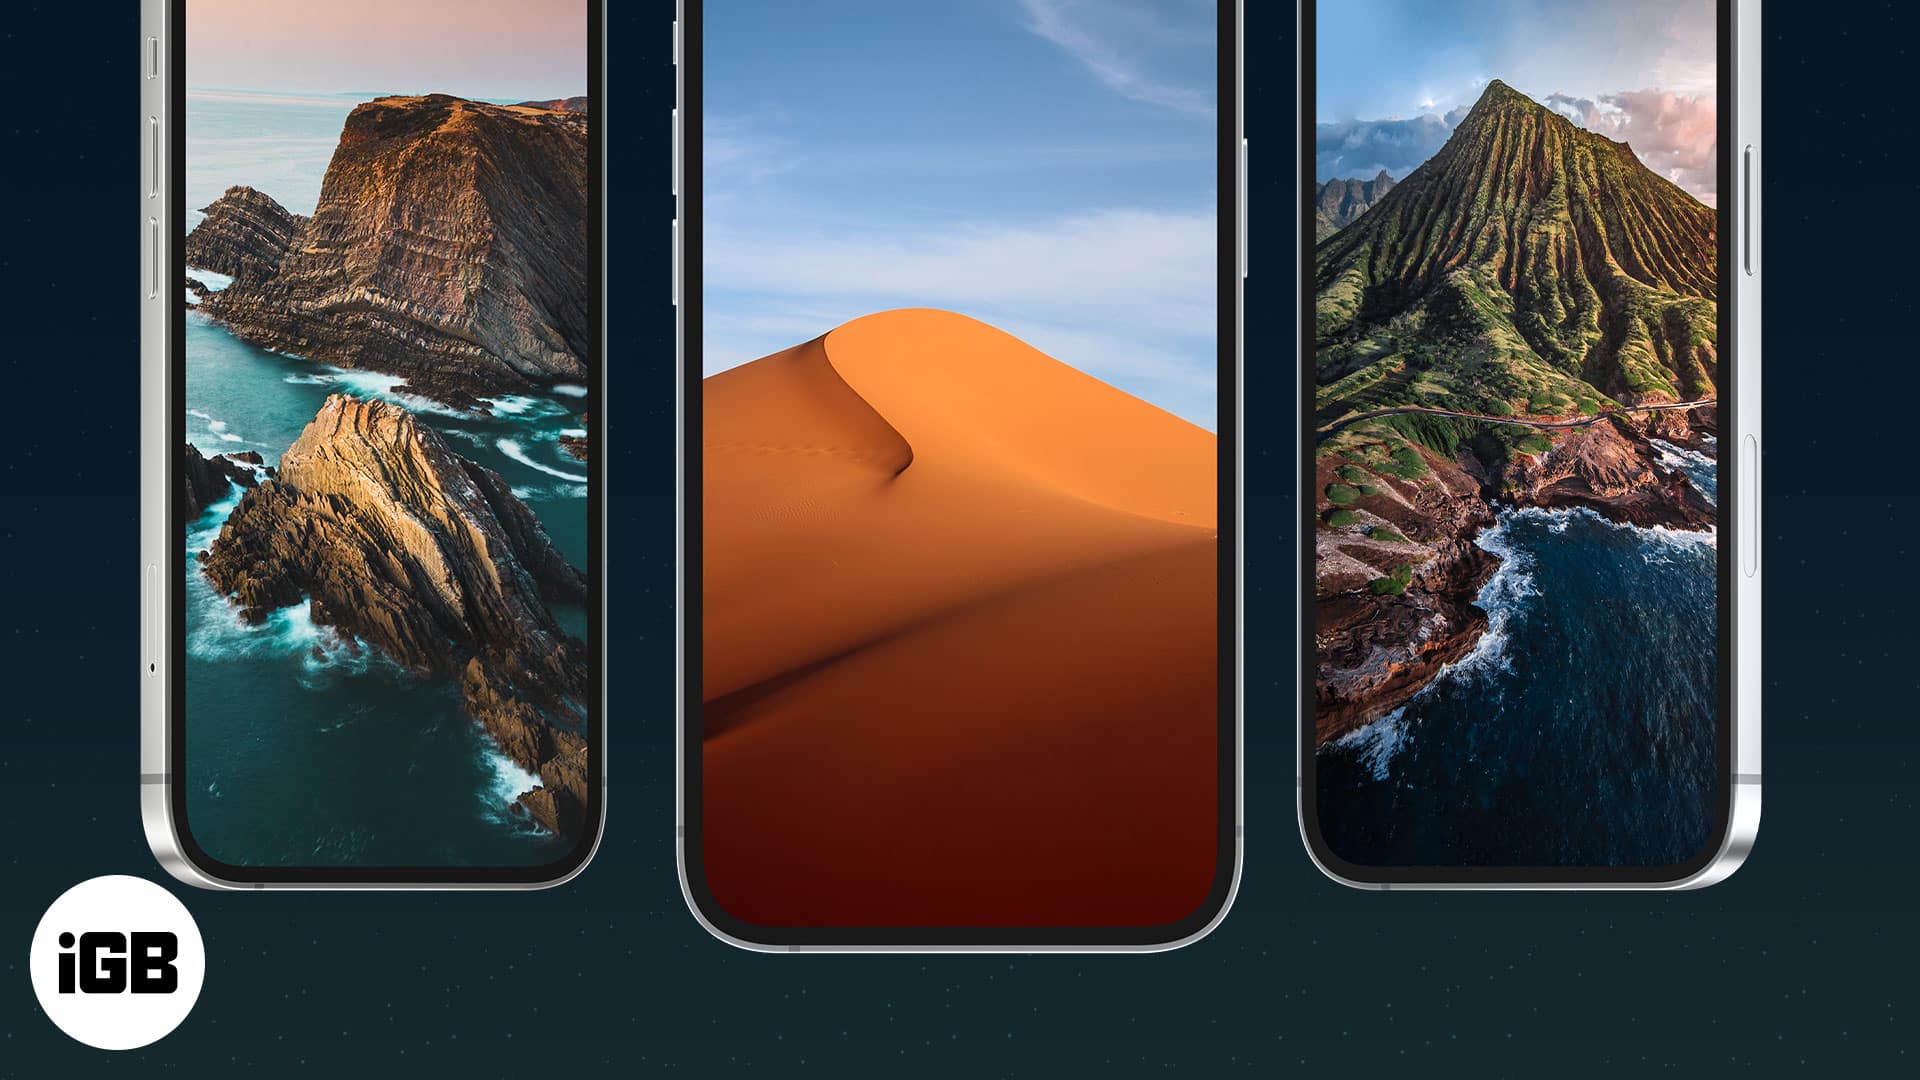 iOS15 Concept v9 | Iphone lockscreen wallpaper, Iphone wallpaper images, Iphone  wallpaper